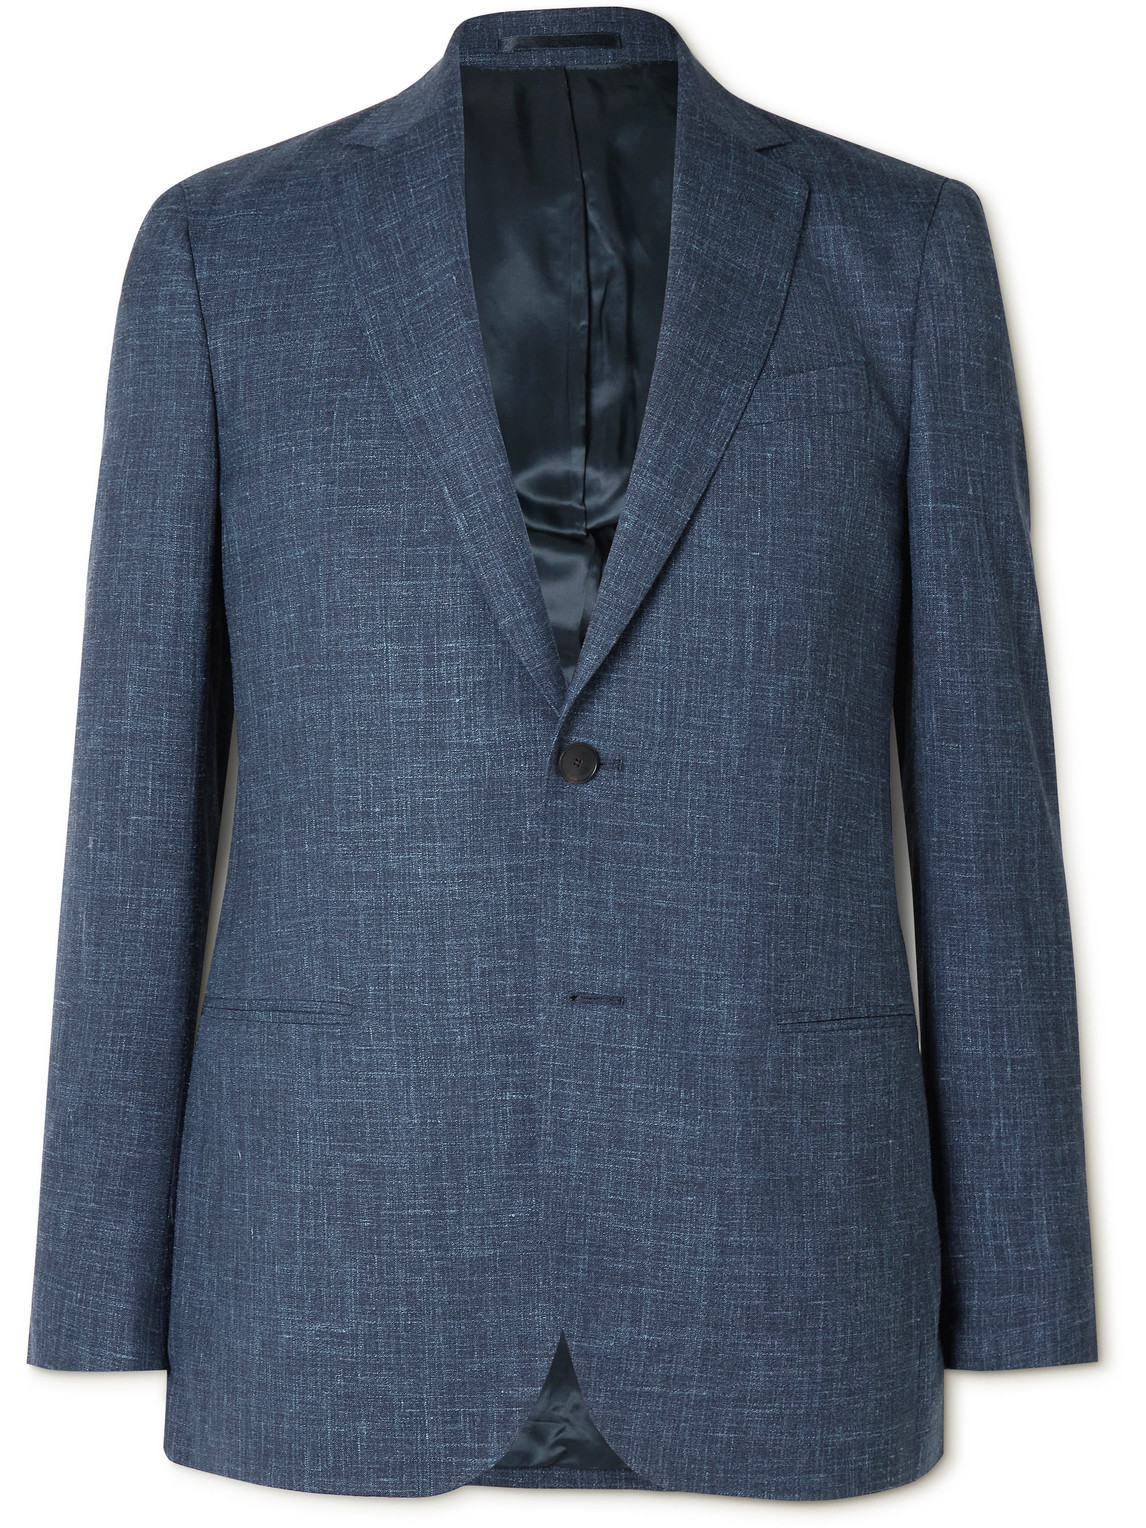 Mr P Virgin Wool, Silk And Linen-blend Suit Jacket In Blue